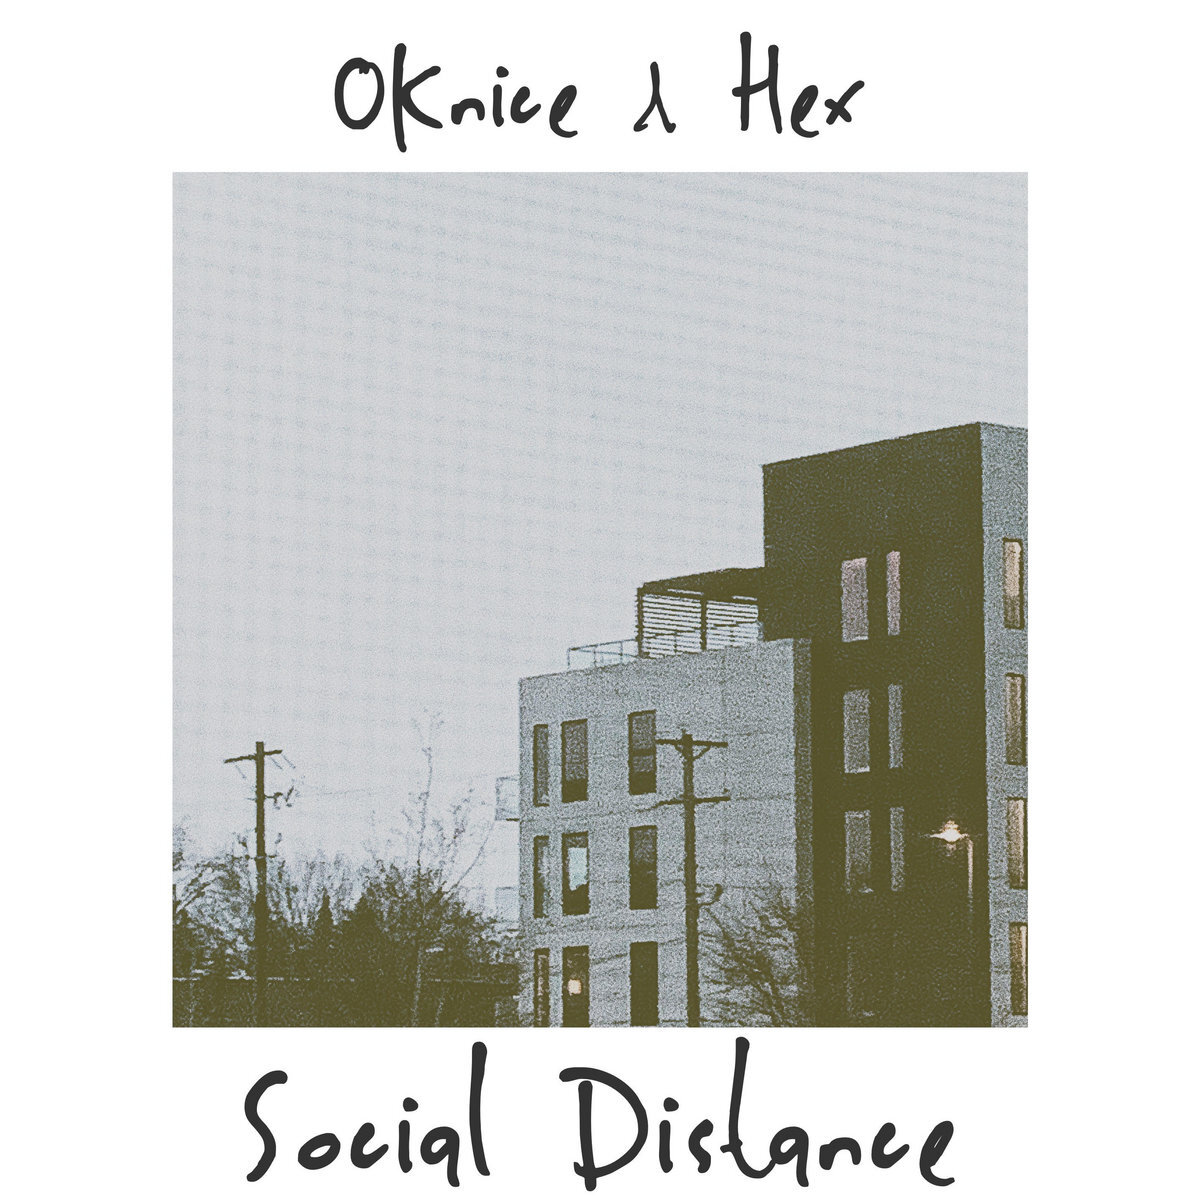 Oknice “Social Distance”